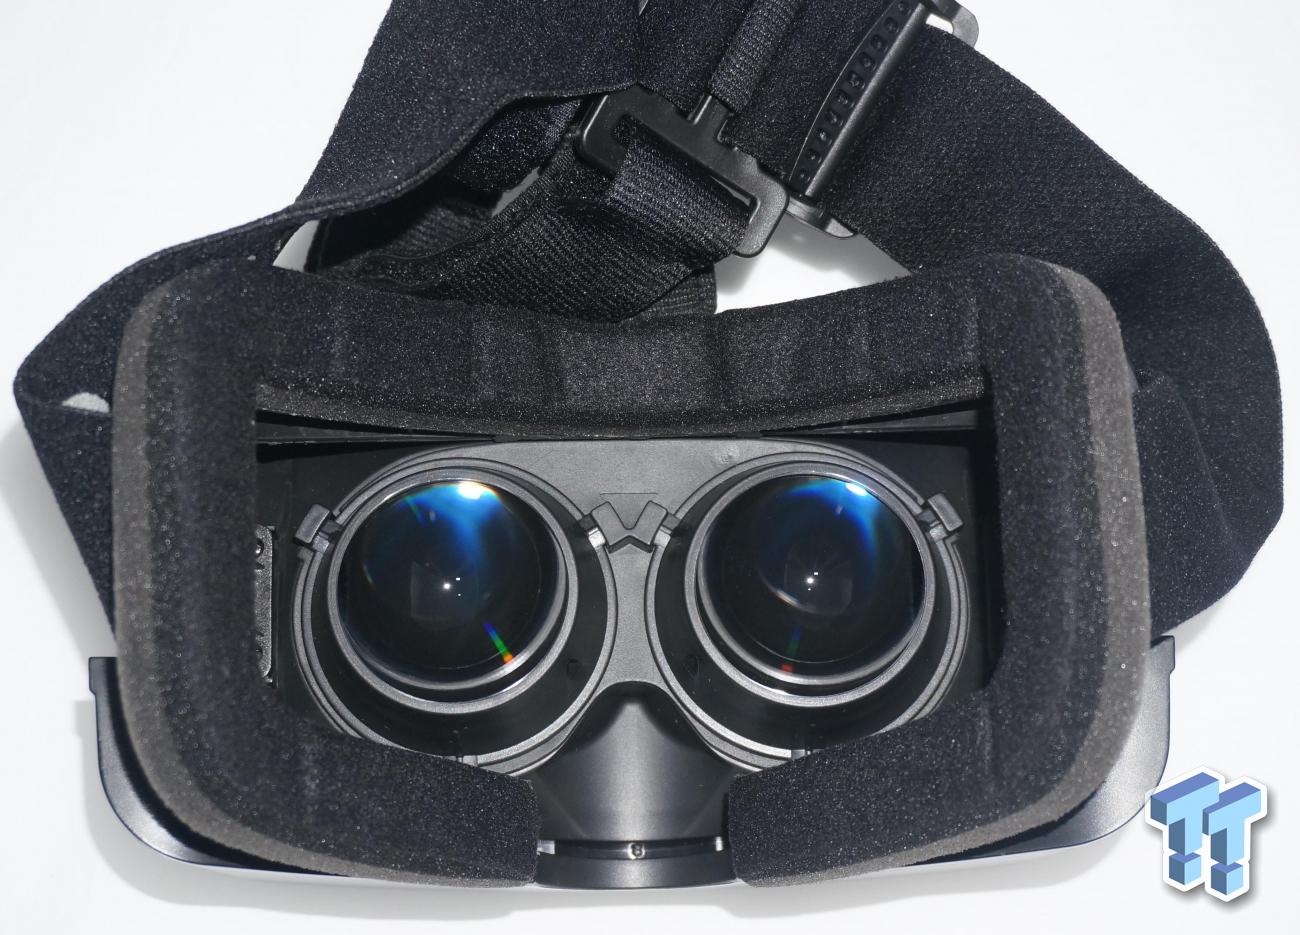 resident ude af drift mentalitet Oculus VR Rift DK2 Unboxing #throughglass and First Impressions